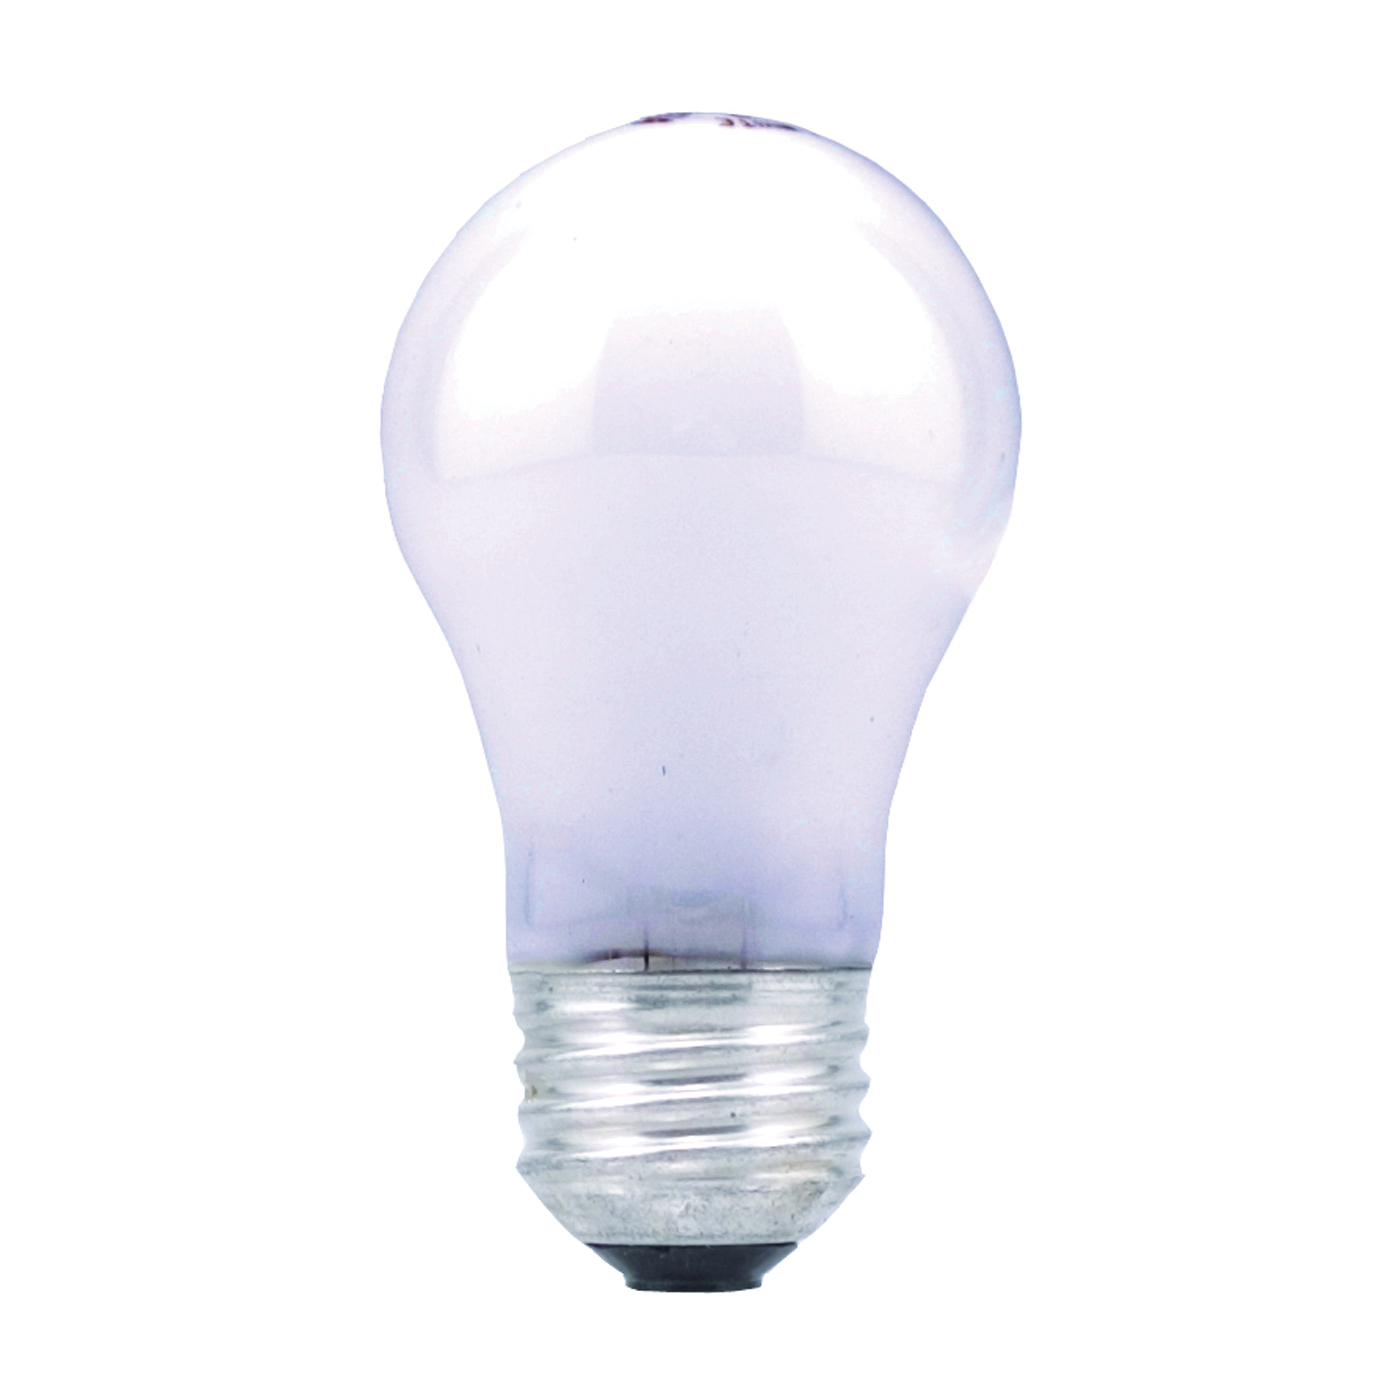 Sylvania 10015 Incandescent Bulb, 15 W, A15 Lamp, Medium E26 Lamp Base, 65 Lumens, 2500 K Color Temp, Soft White Light - 1